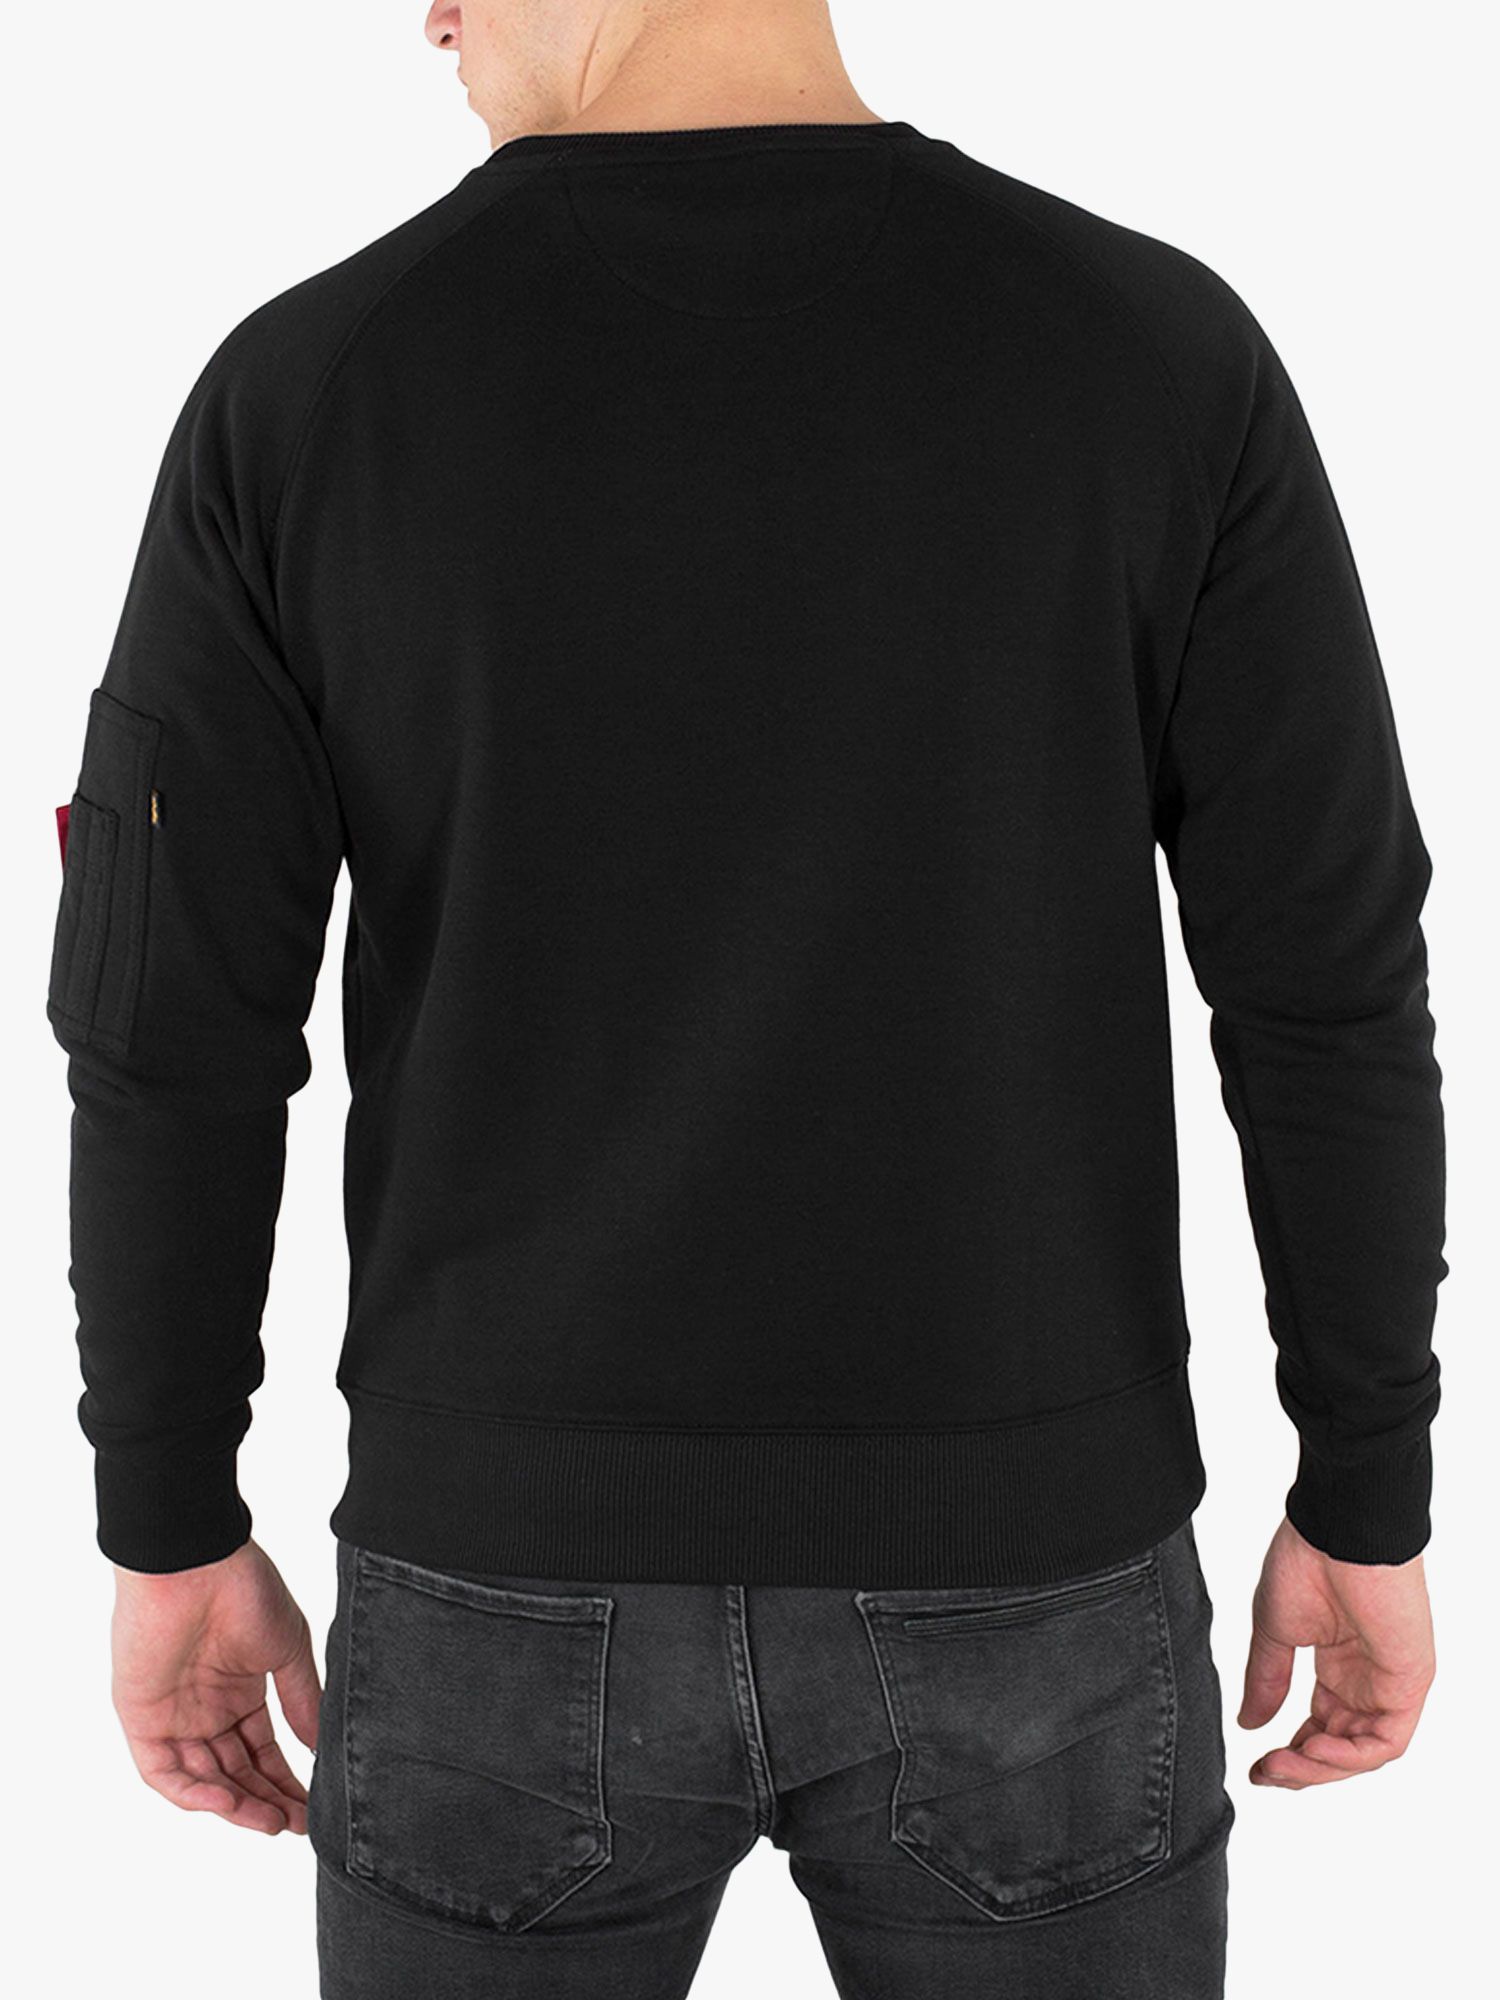 Sleeve at Alpha John & 03 Pocket Lewis Black Partners Sweatshirt, Zip Industries X-Fit